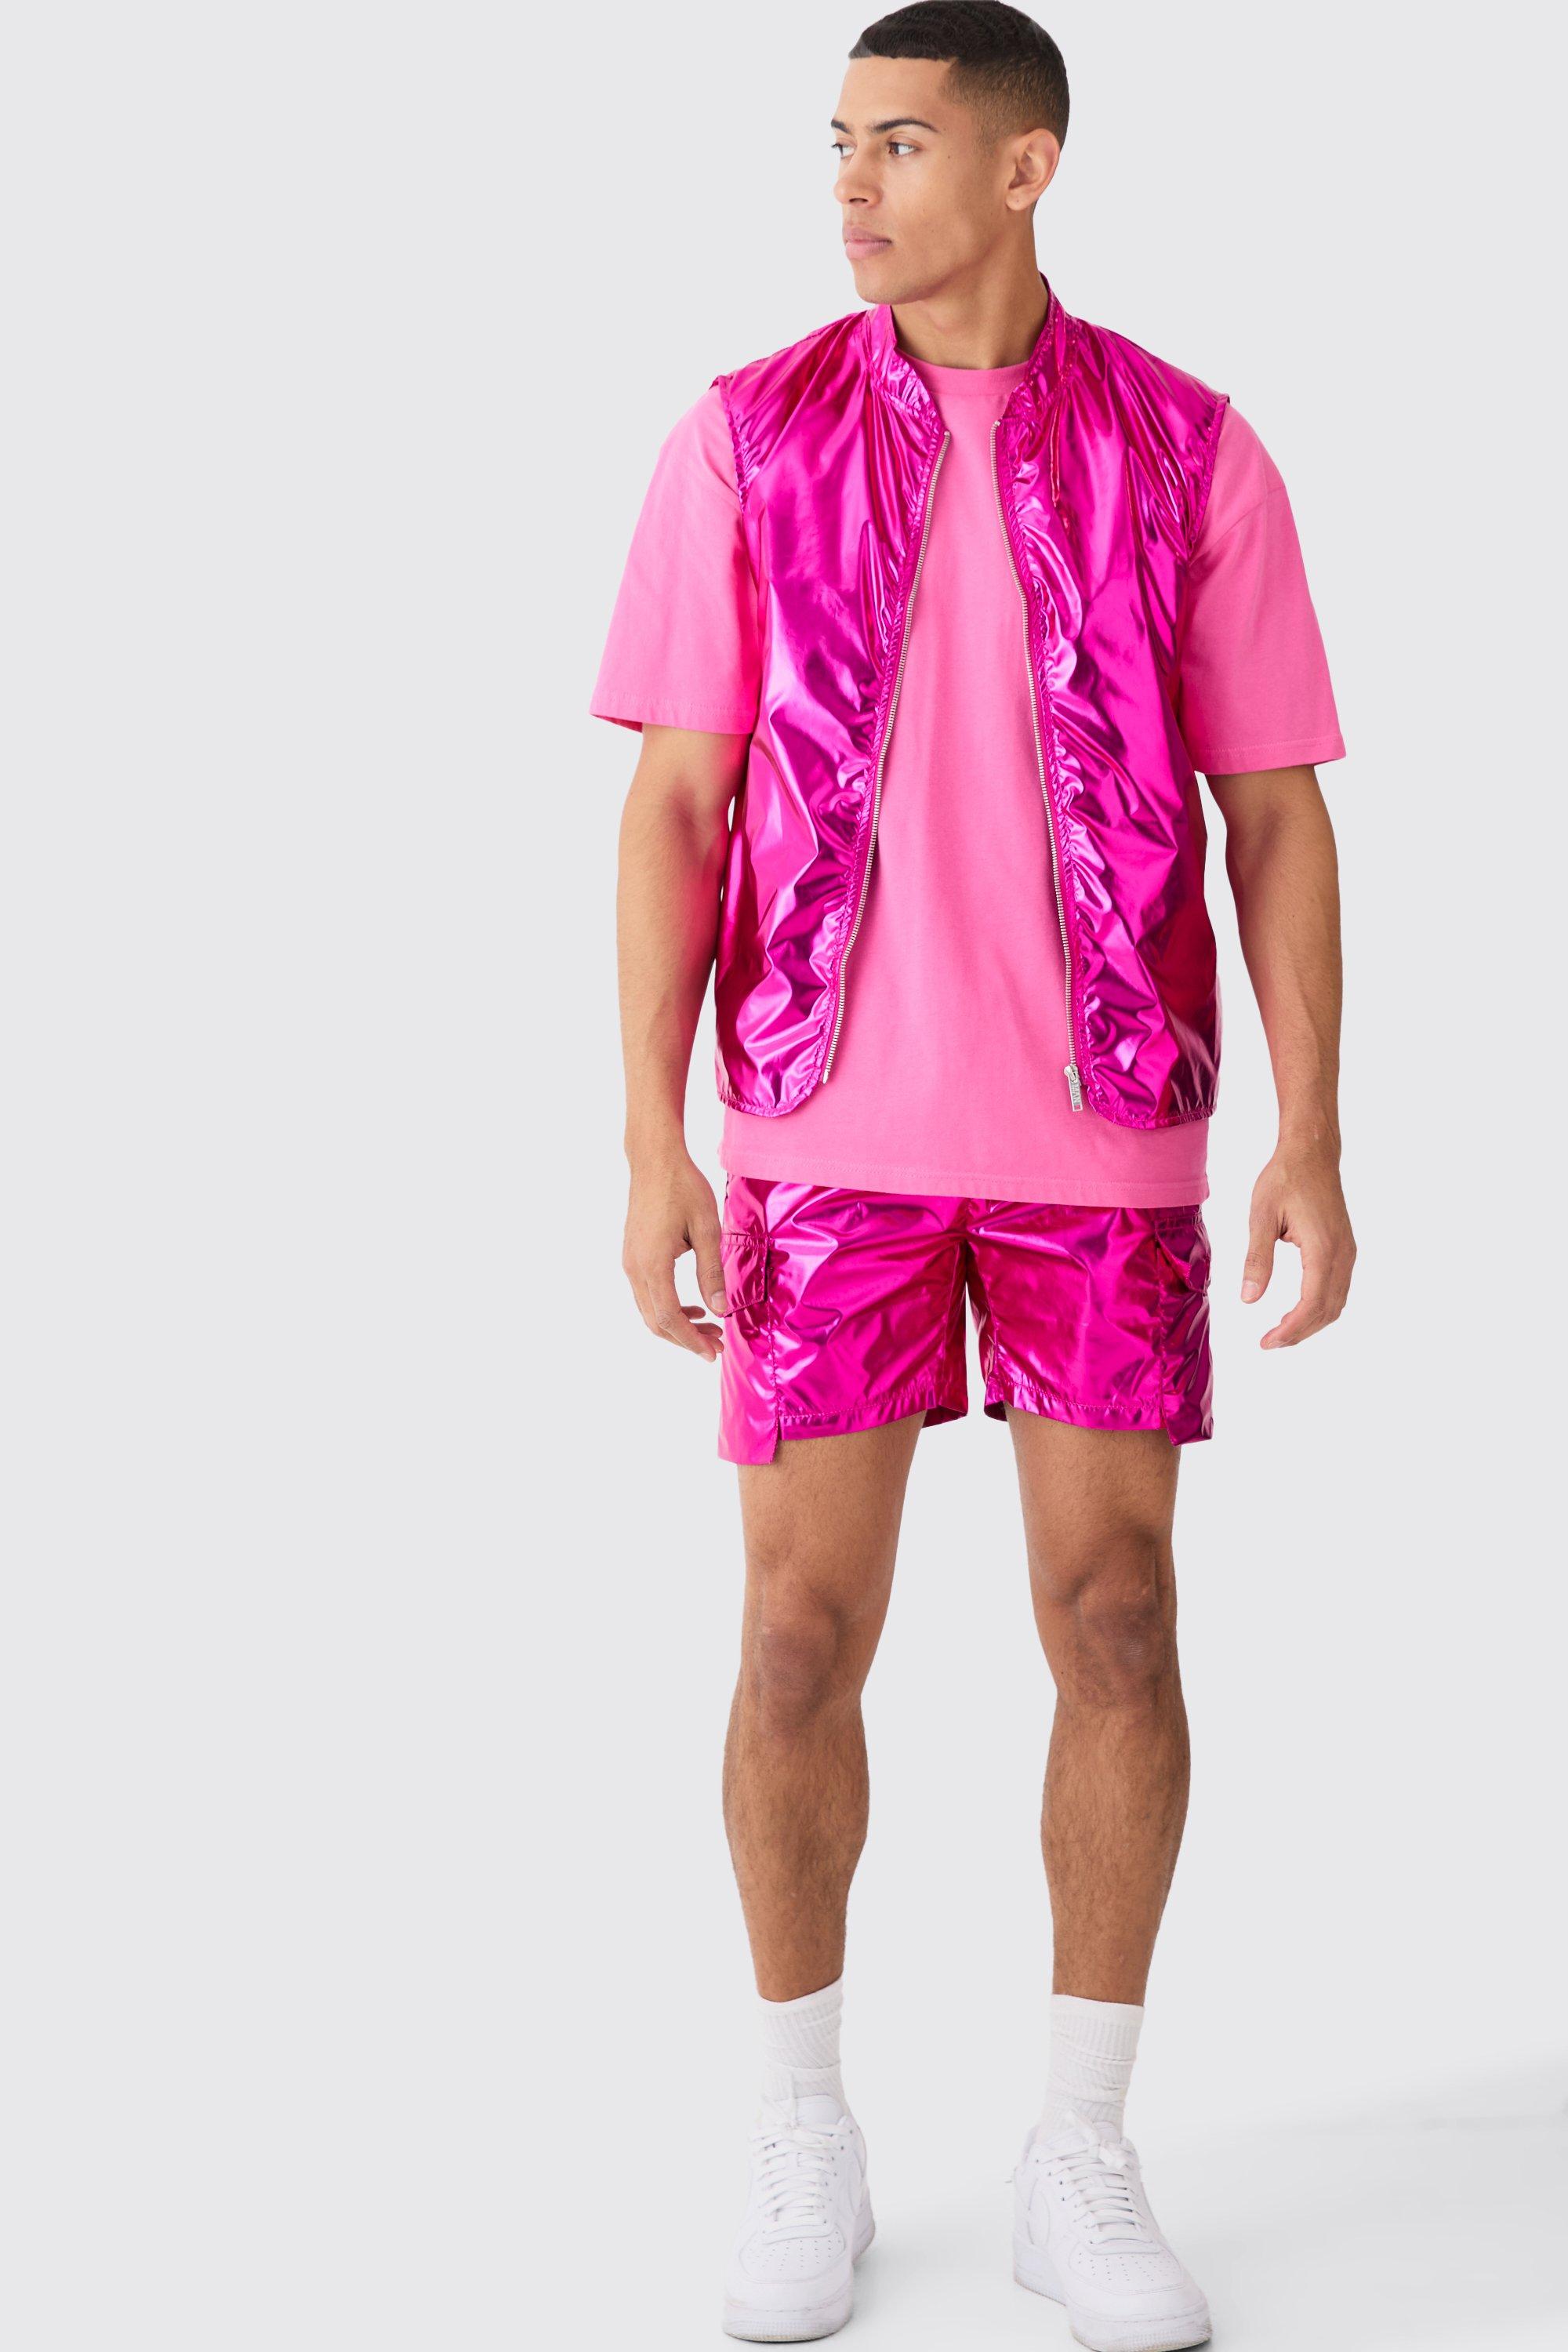 Image of Metallic Vest And Parachute Short Set, Pink